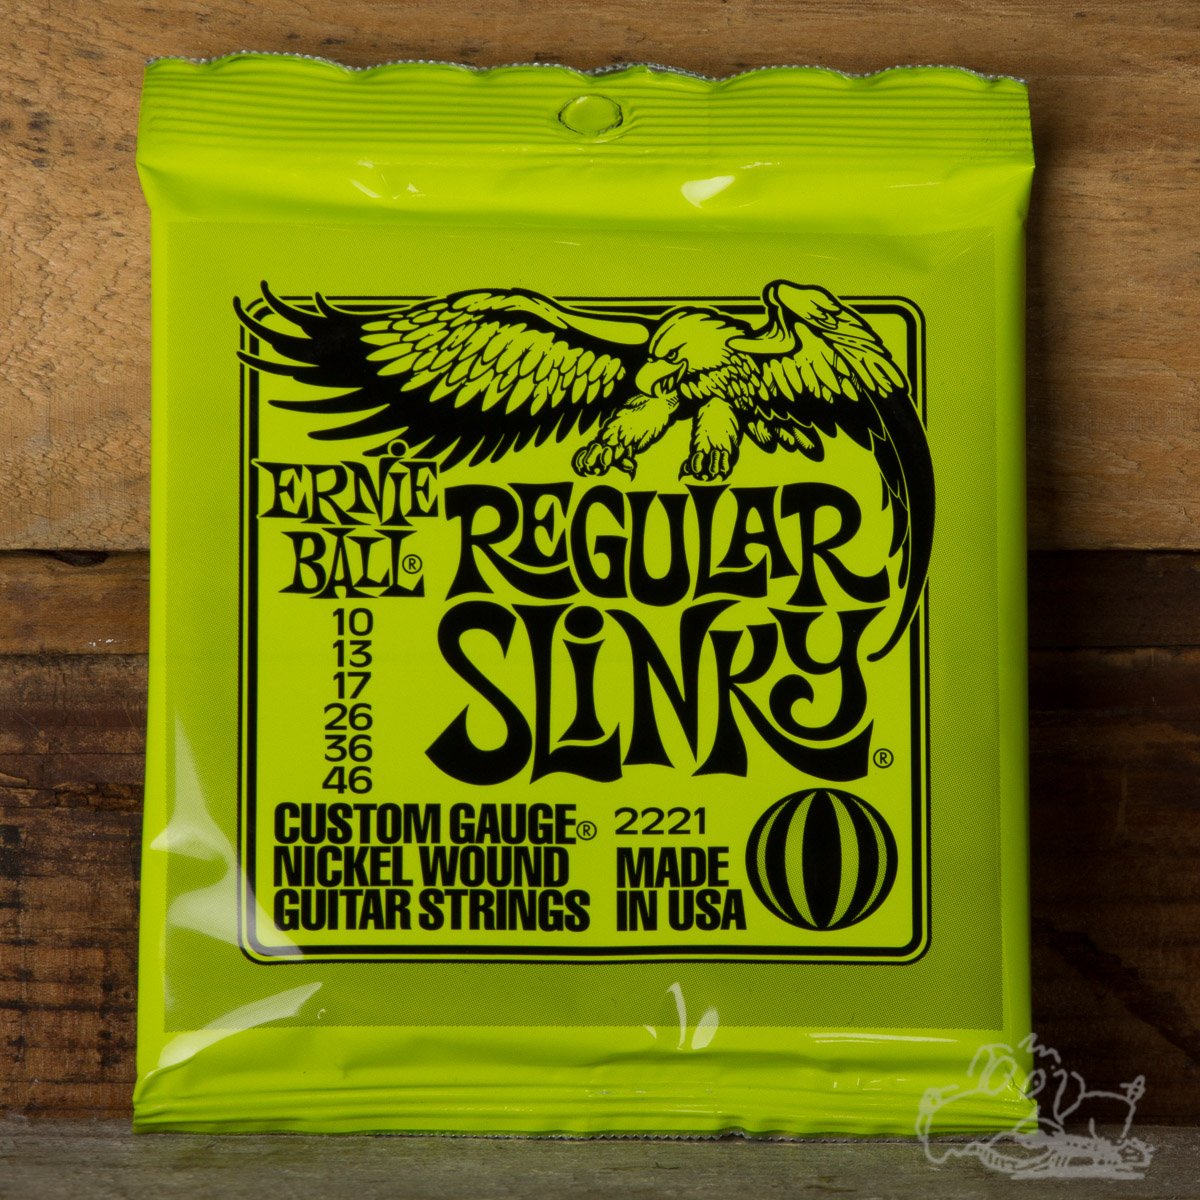 Regular Slinky 10-46 Ernie Ball Electric Guitar Strings